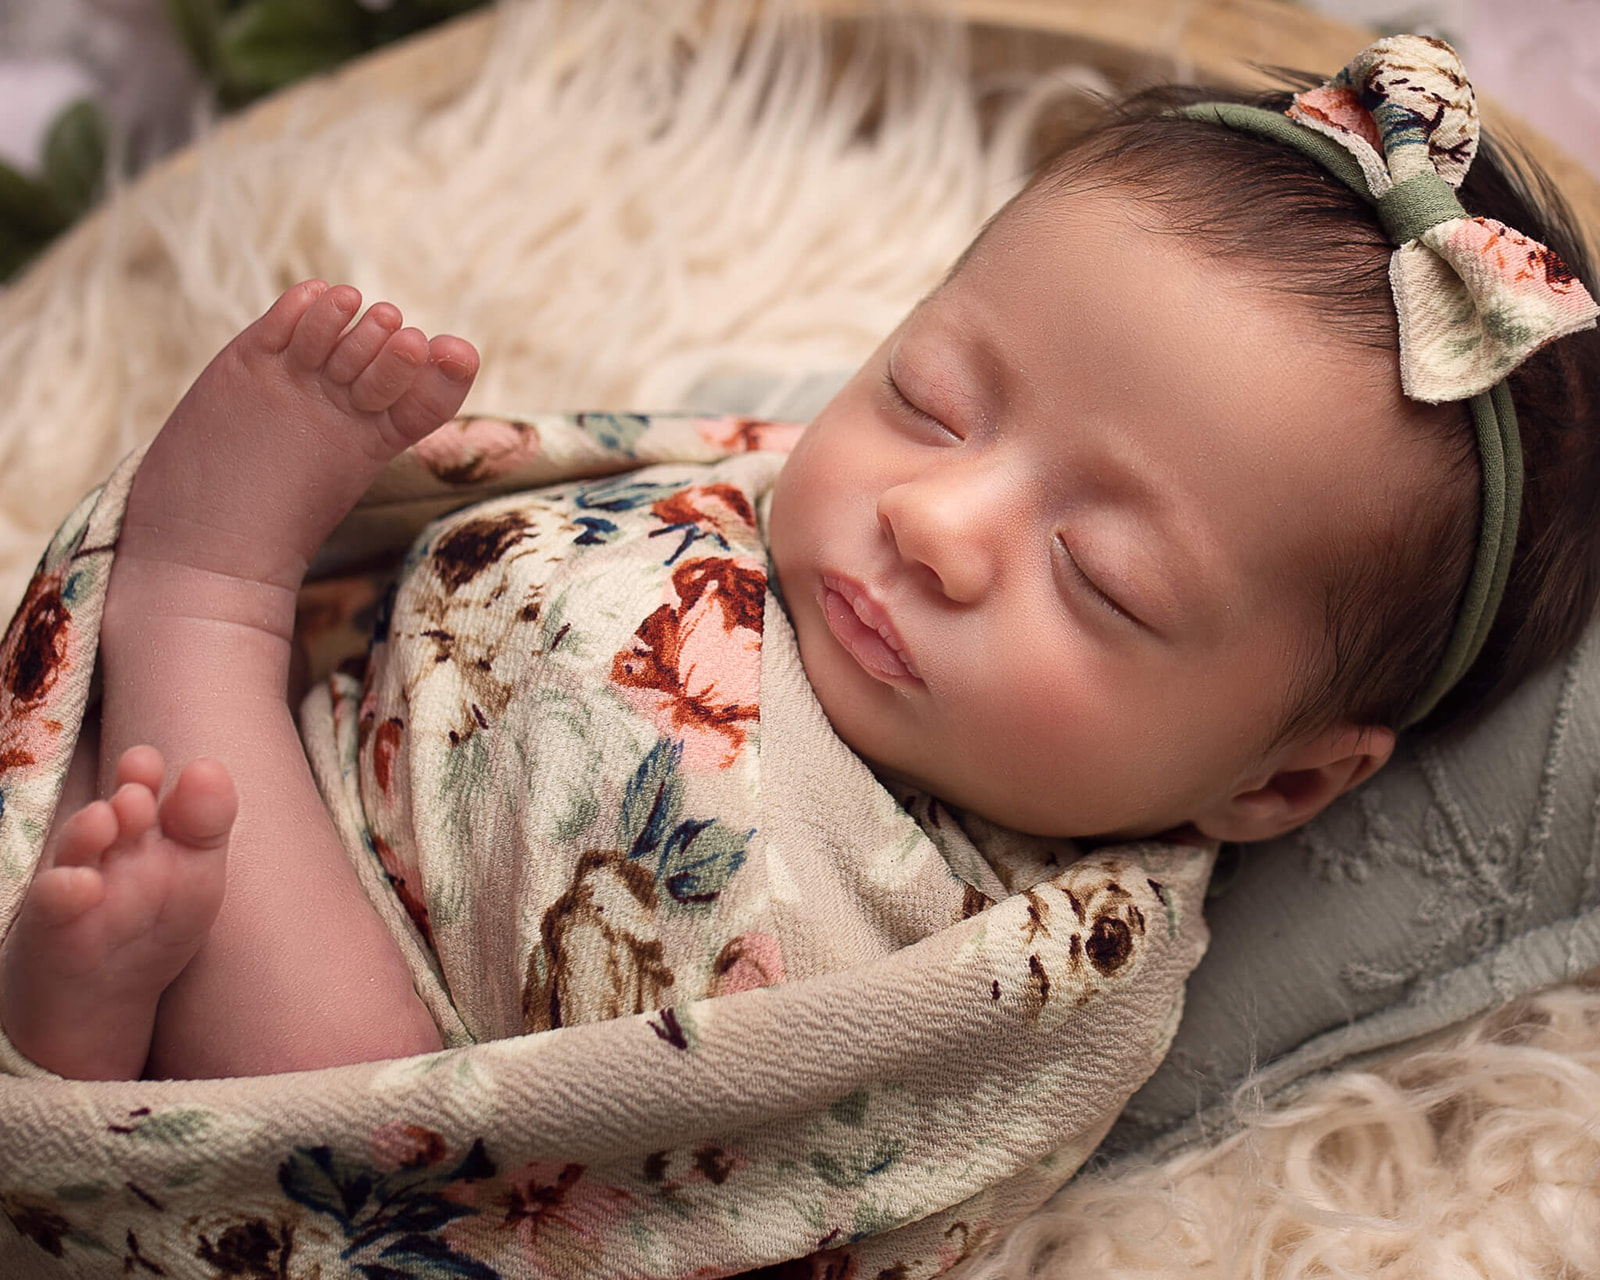 Cleveland OH newborn photographer captures adorable newborn